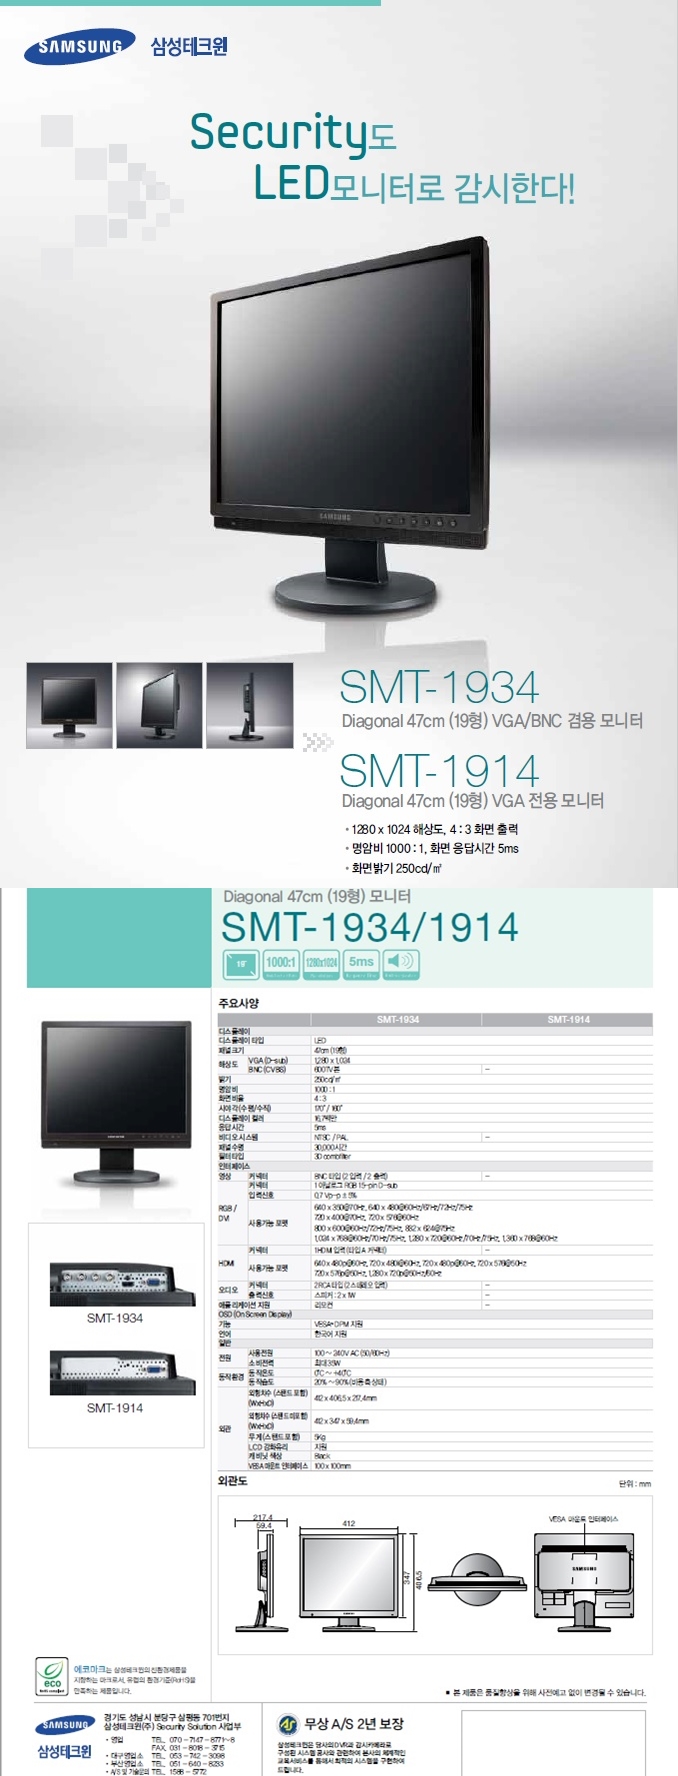 SMT-1914-1-vert_124312.jpg